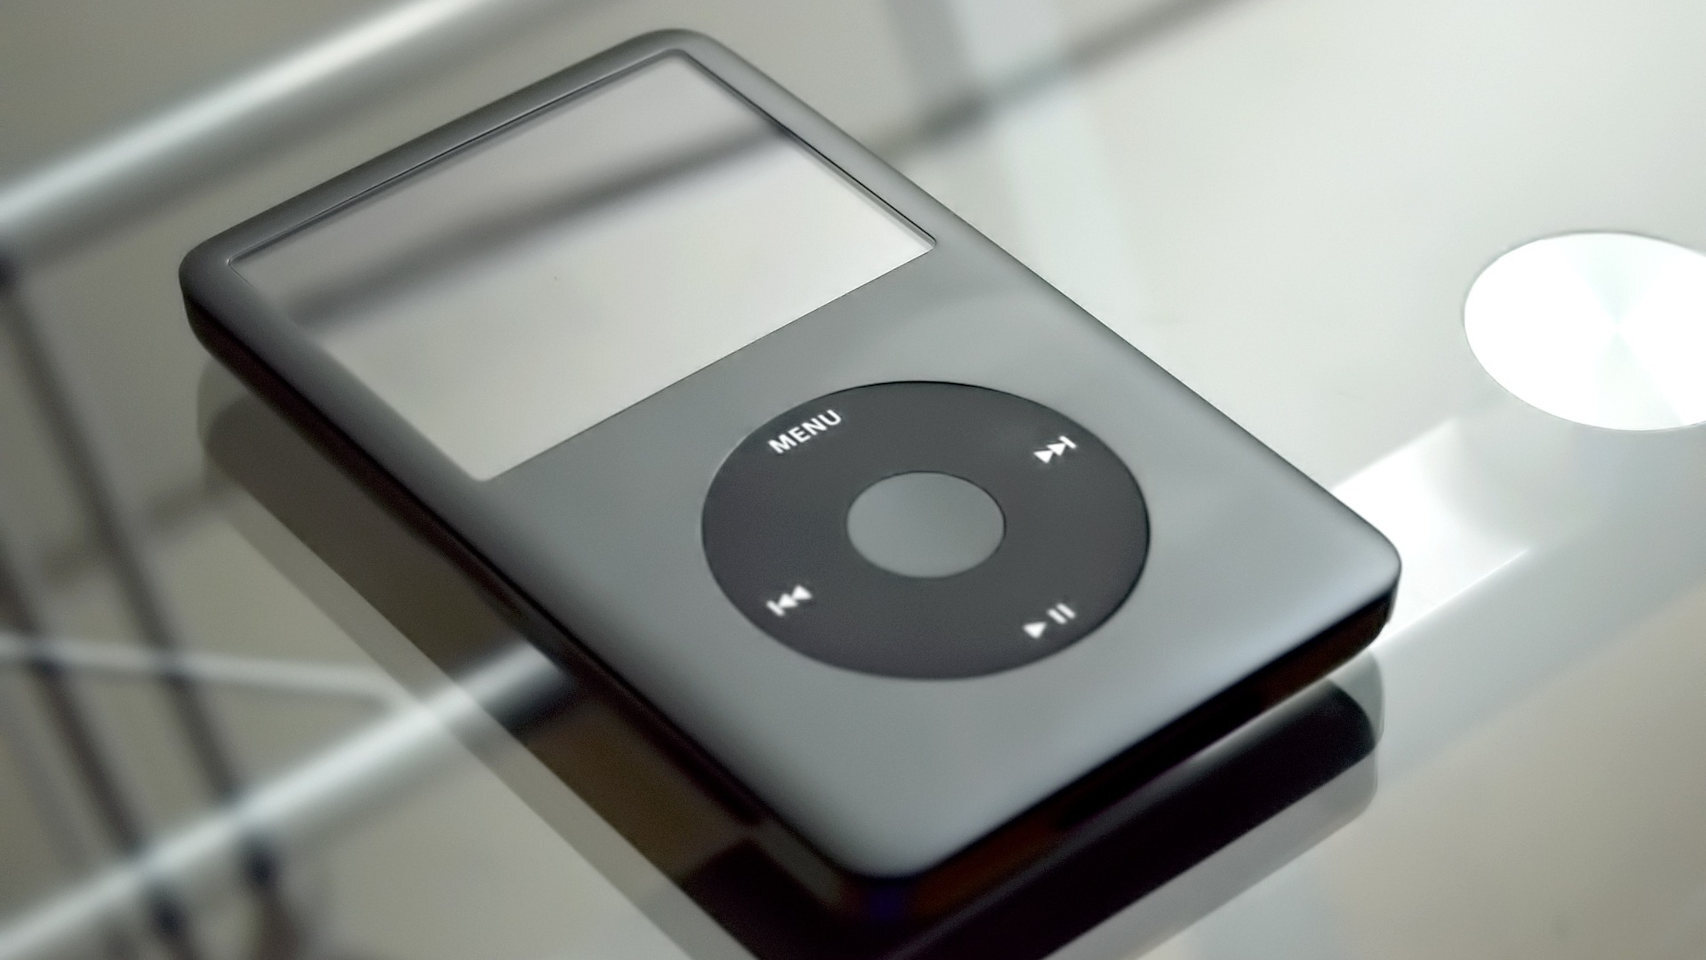 iPod de Apple